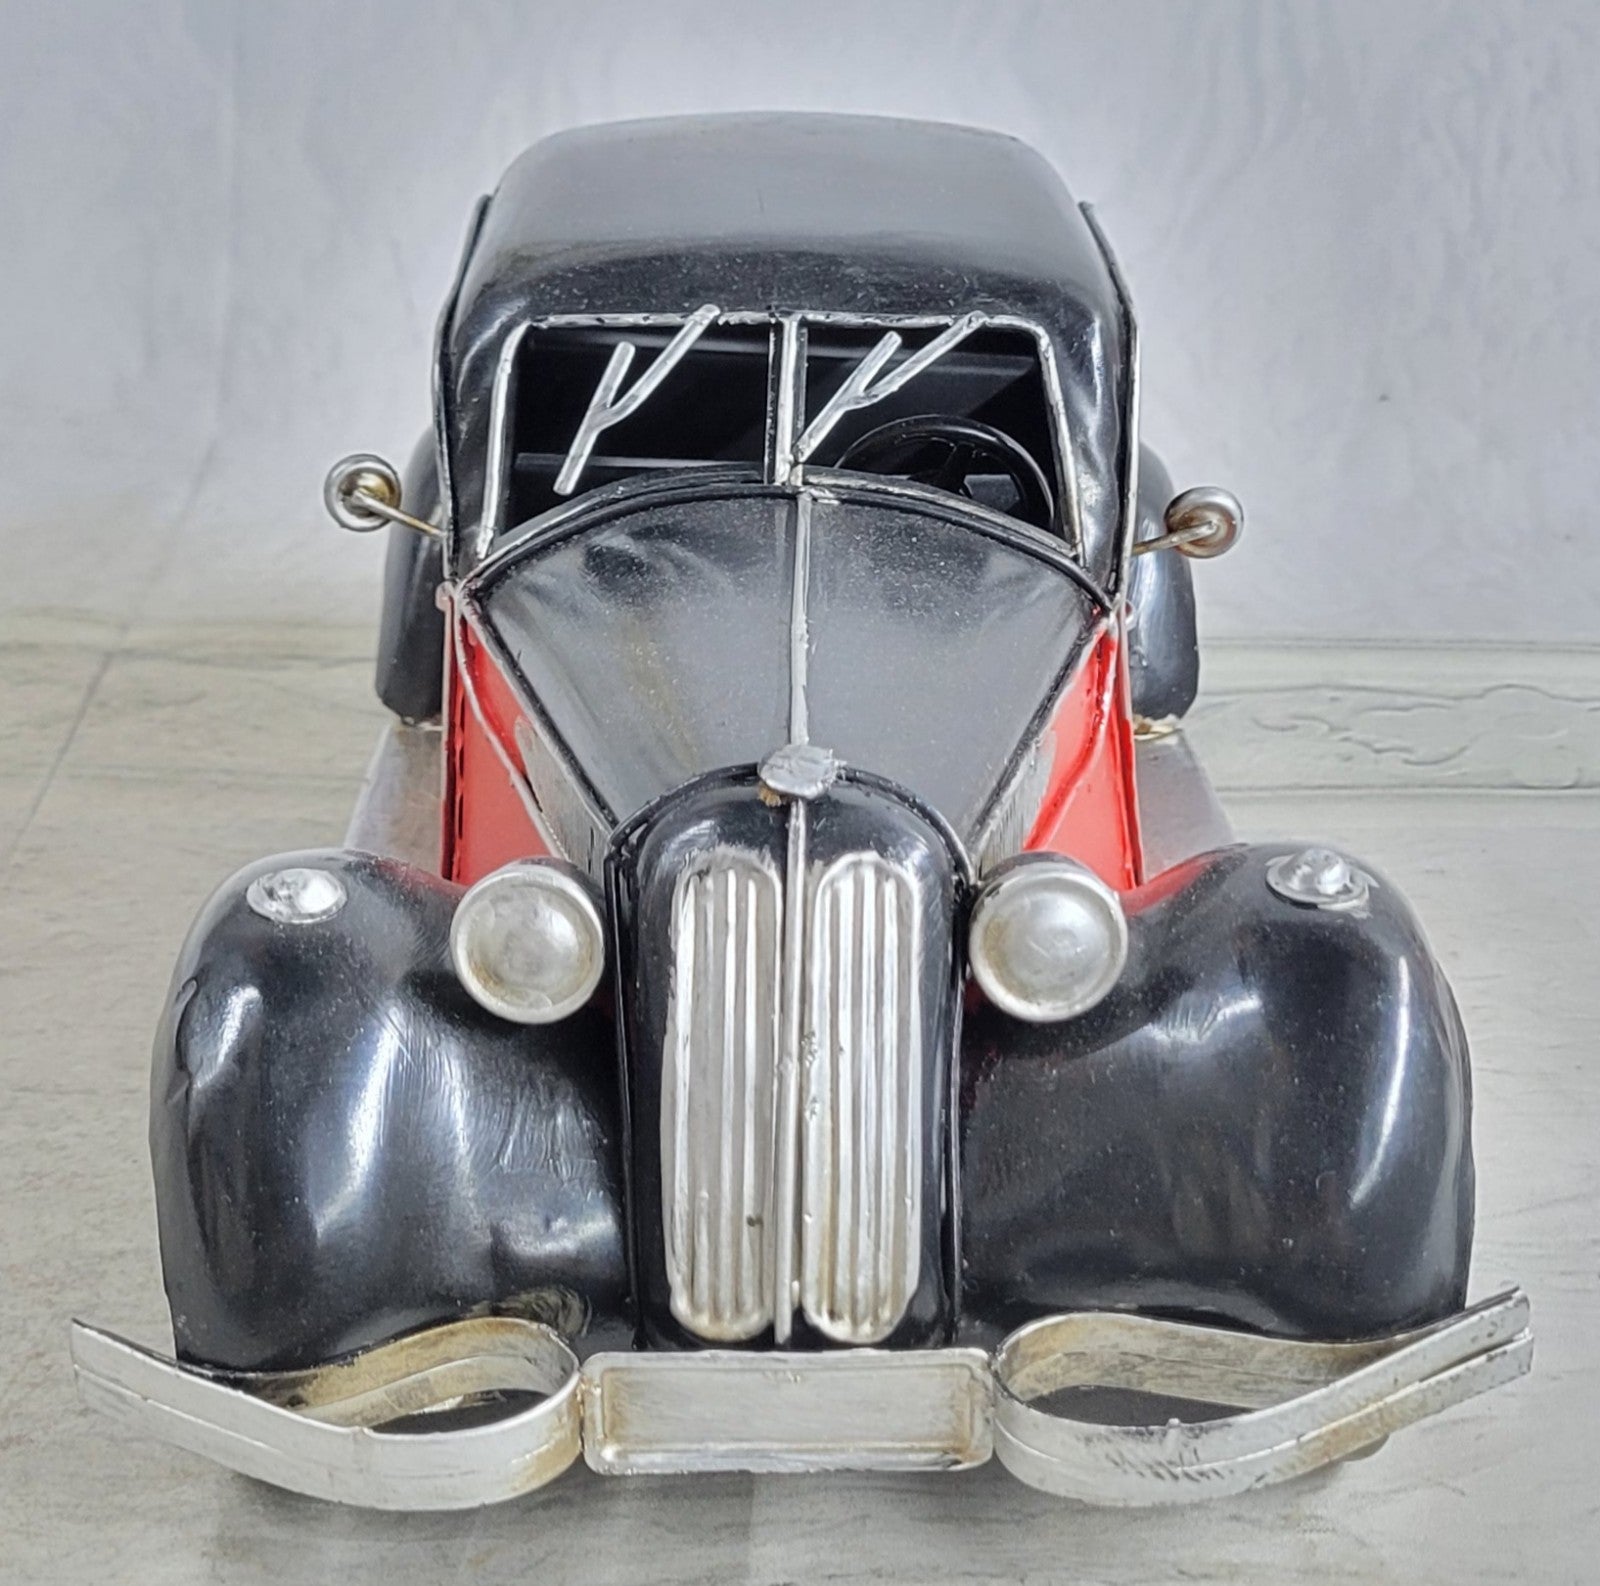 Executive Model Jayland USA 1937 Automobile COUPE Classic Artwork 1/10 NEW!! SALE